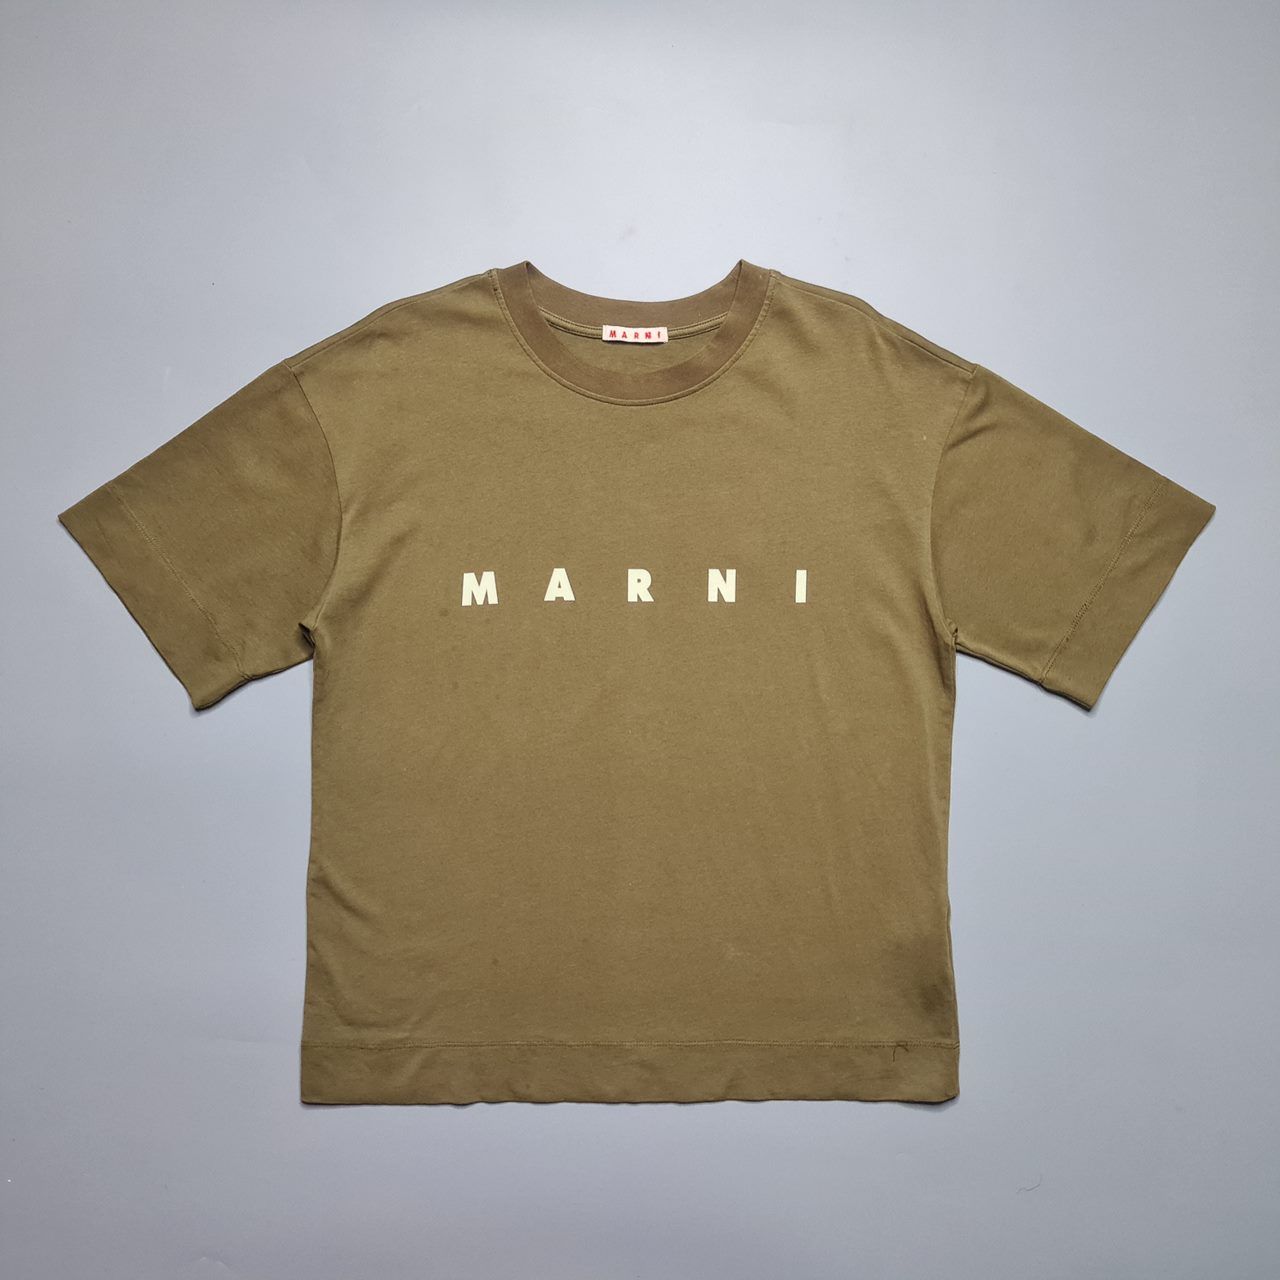 Marni - Logo Printed Oversized T-Shirt - 1